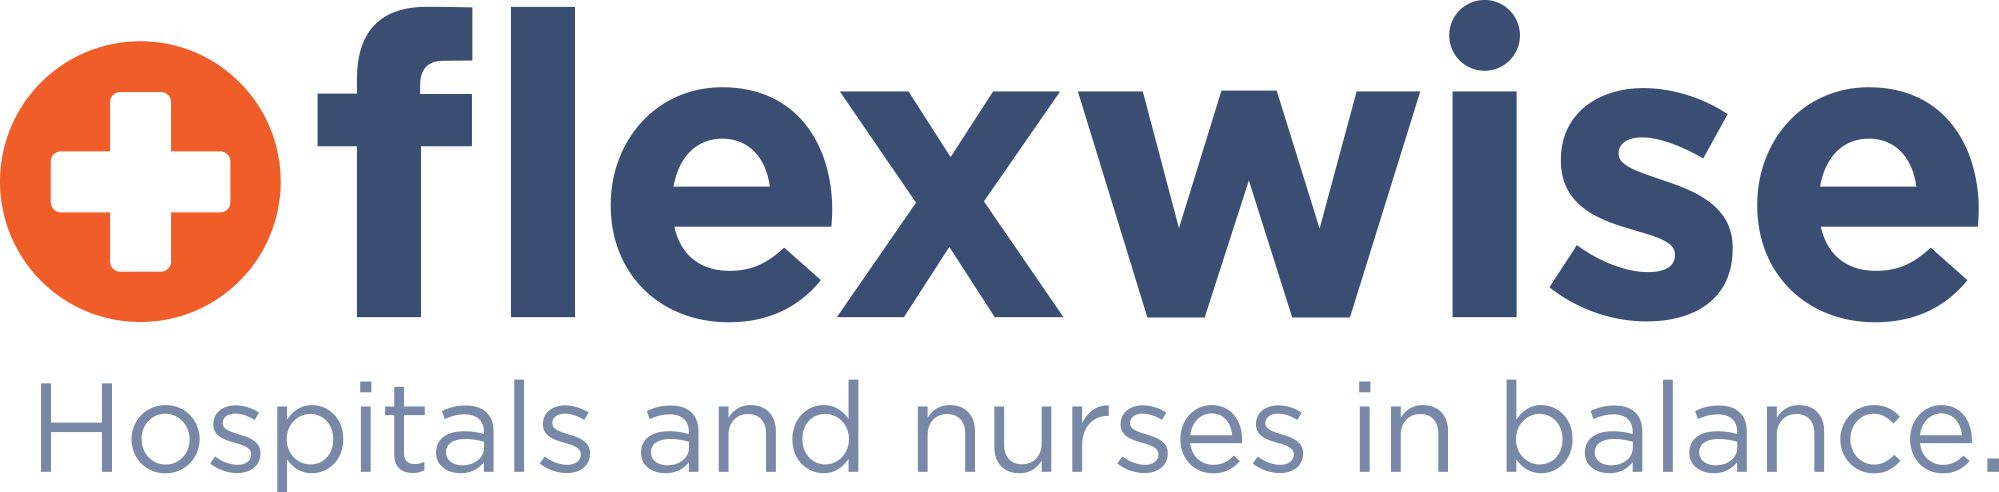 Flexwise Health Logo